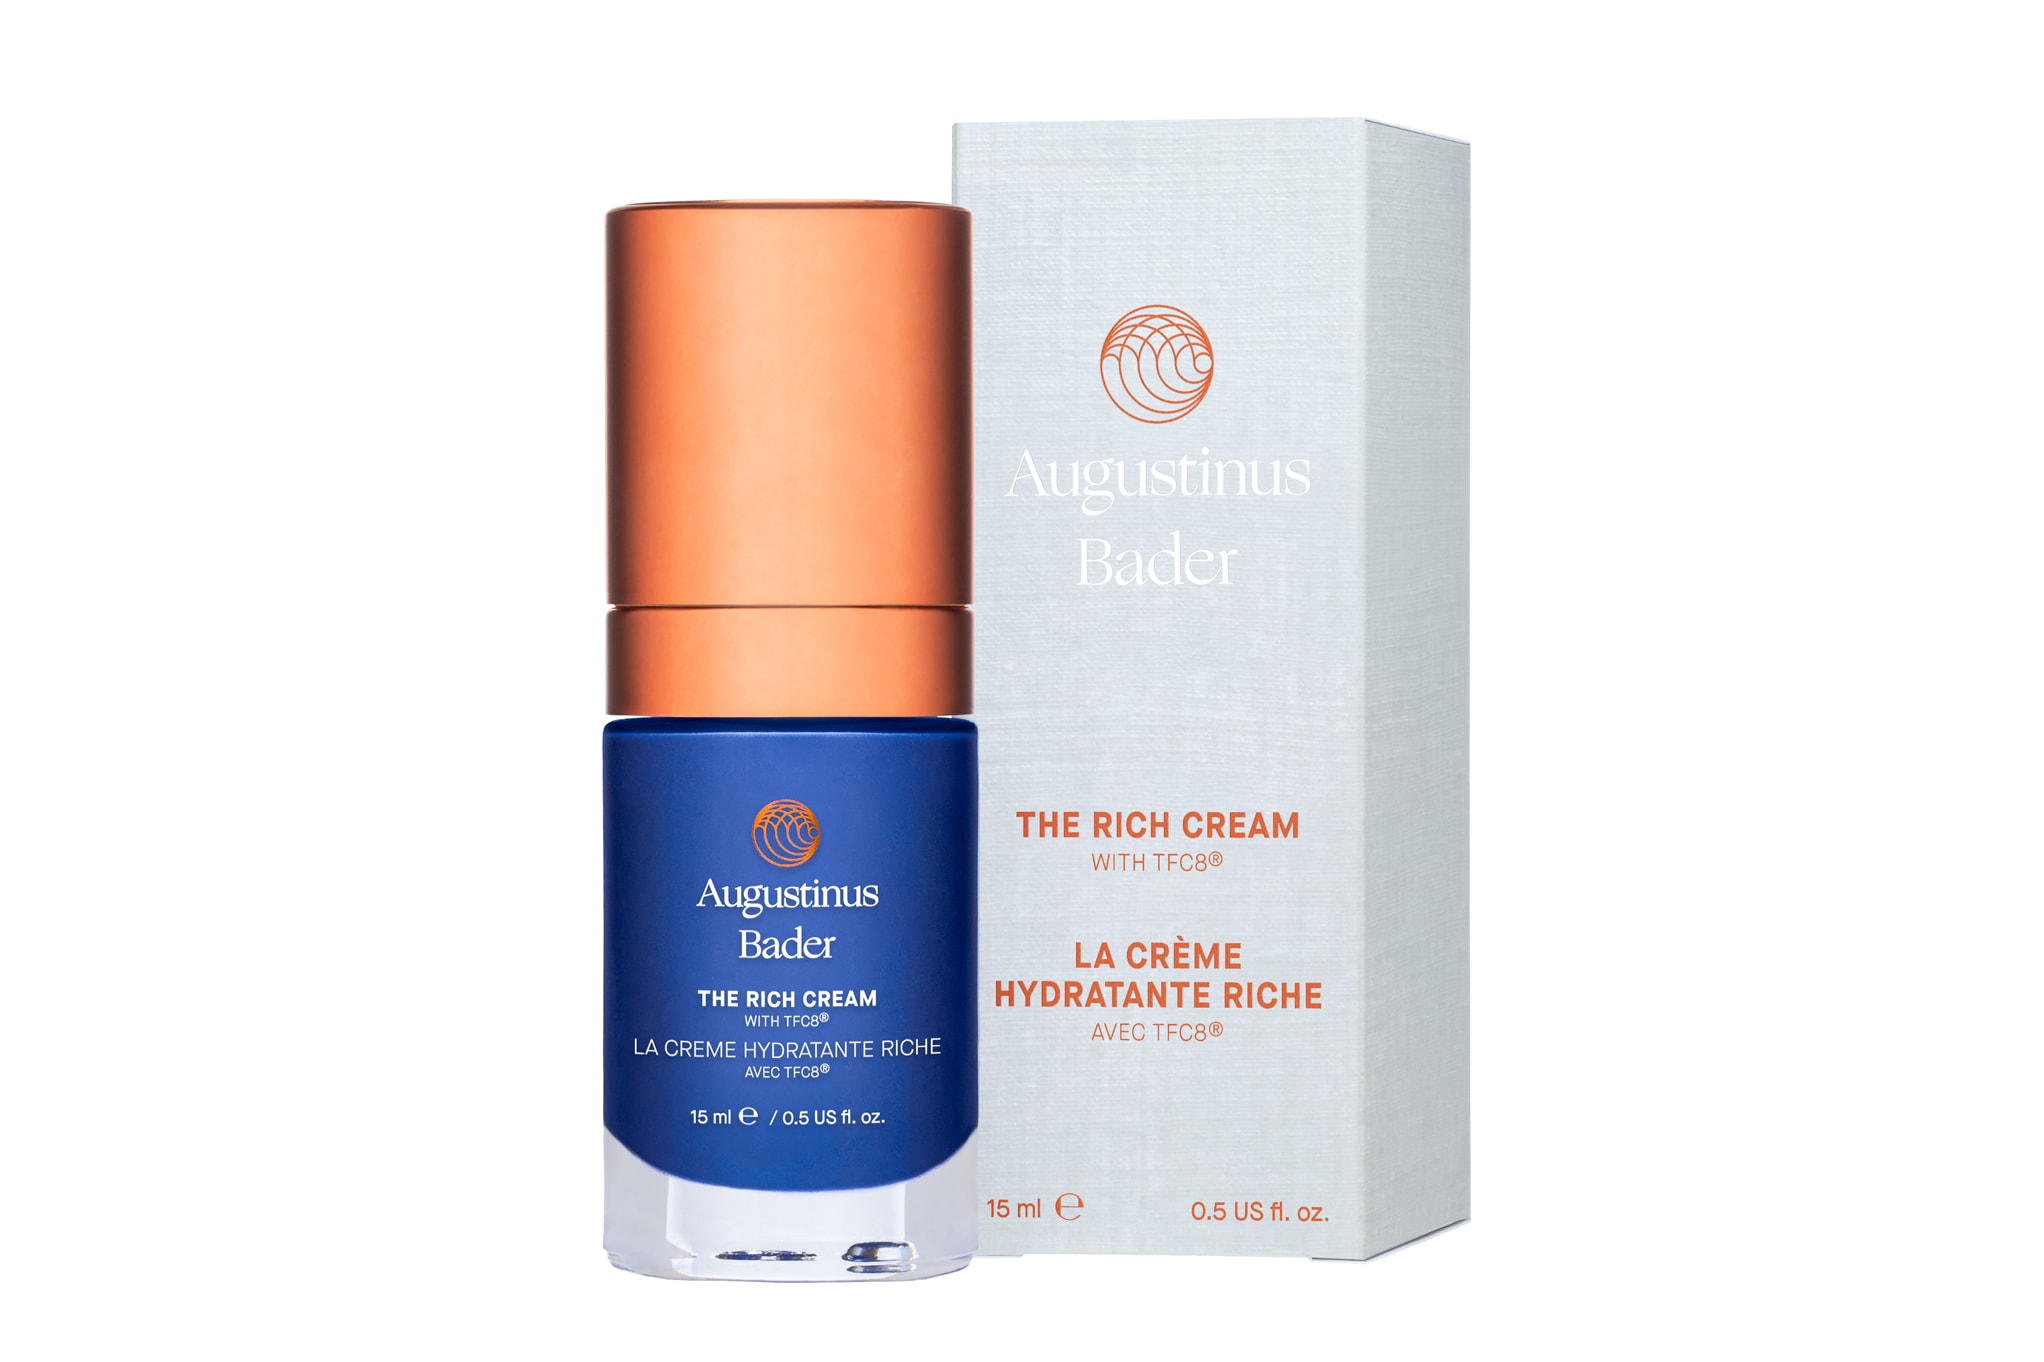 Augustinus Bader The Rich Cream Upgrade Release Skincare Cult Favorite Product New Formula Vegan